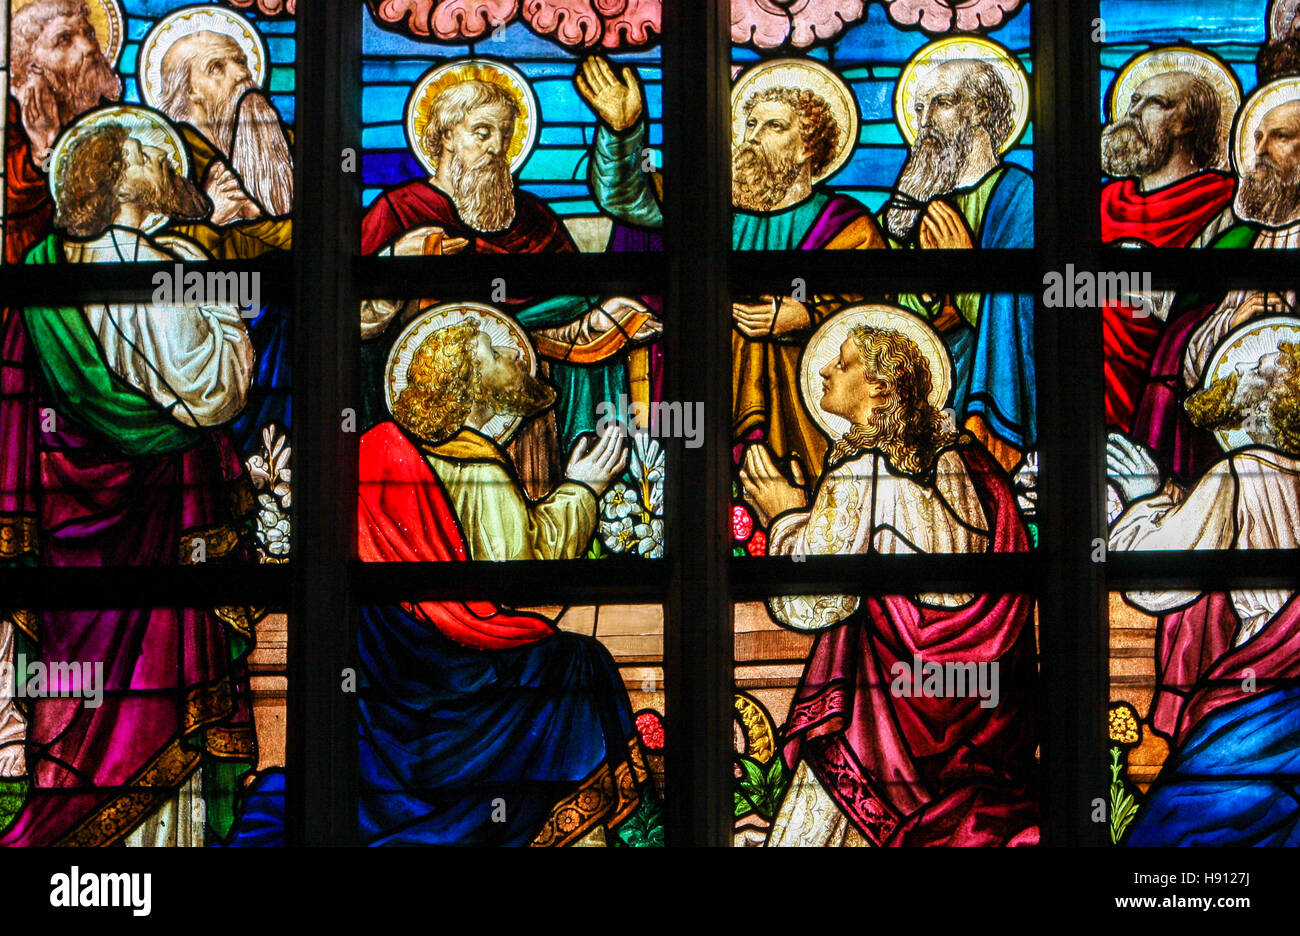 Stained Glass window depicting the Twelve Apostles of Jesus in the Church of Alsemberg, Belgium. Stock Photo